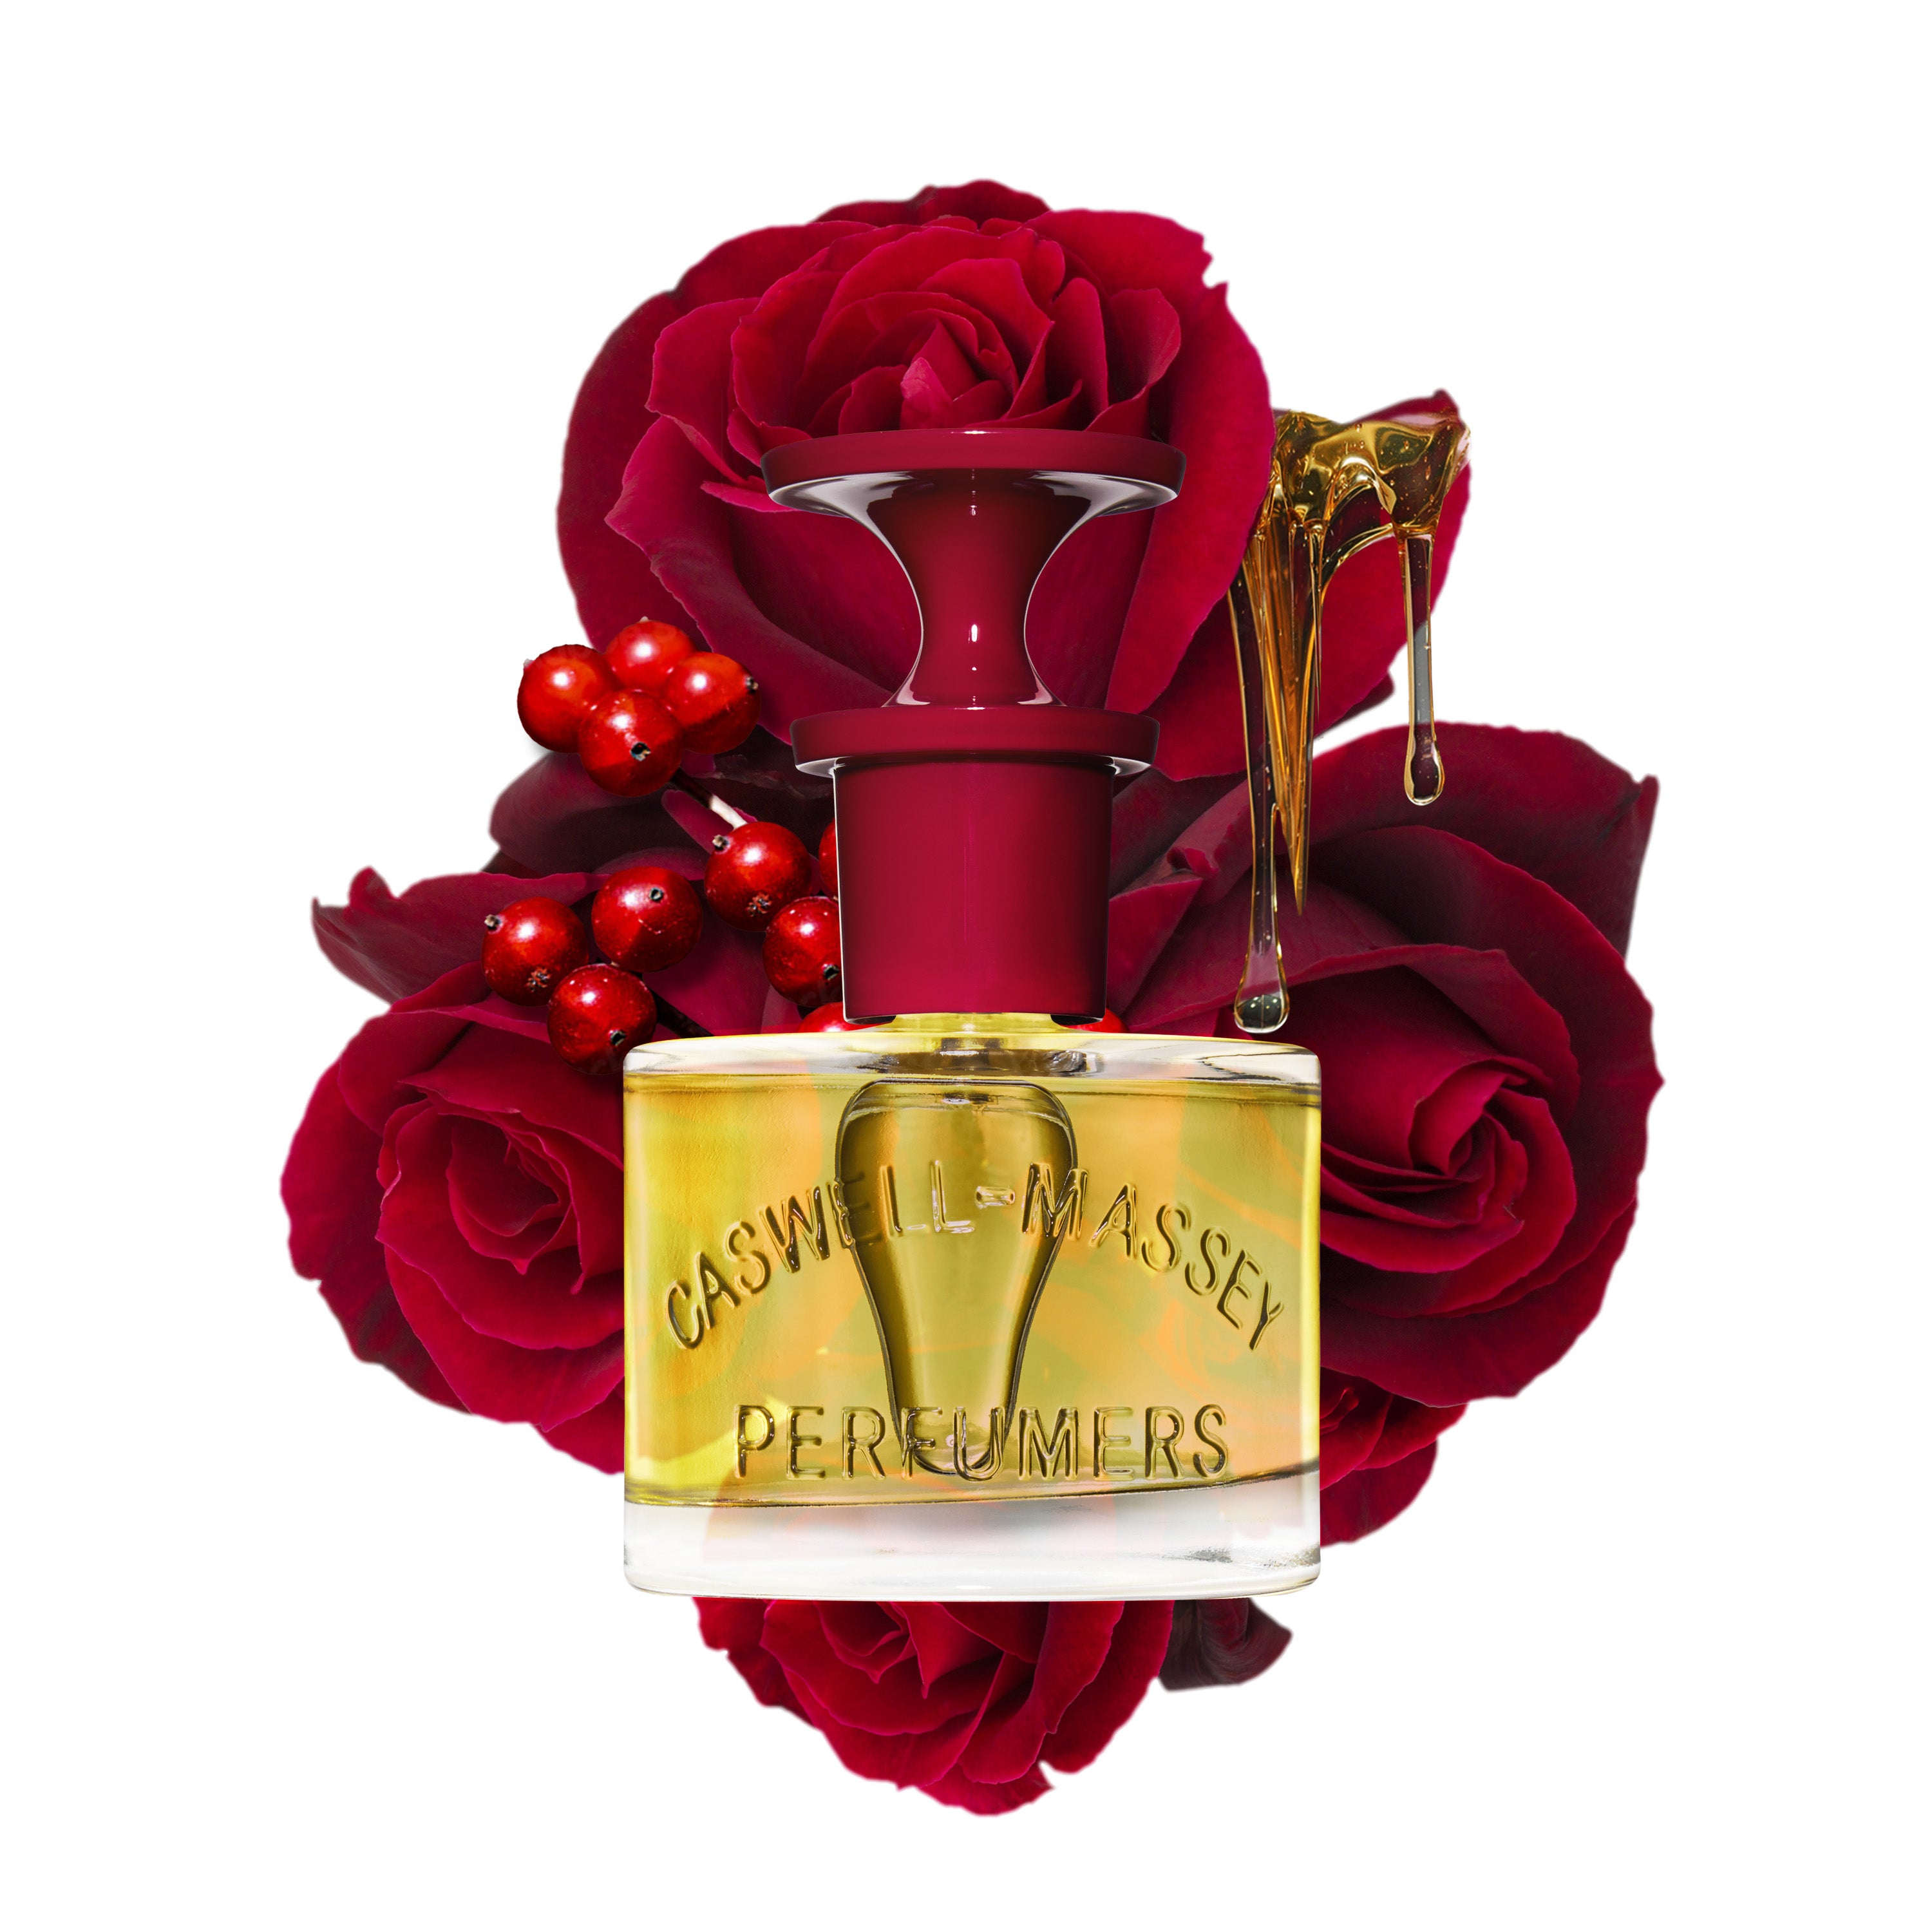 MAREM Perfume by Caswell-Massey, fine fragrance for women, 60mL Full-Size